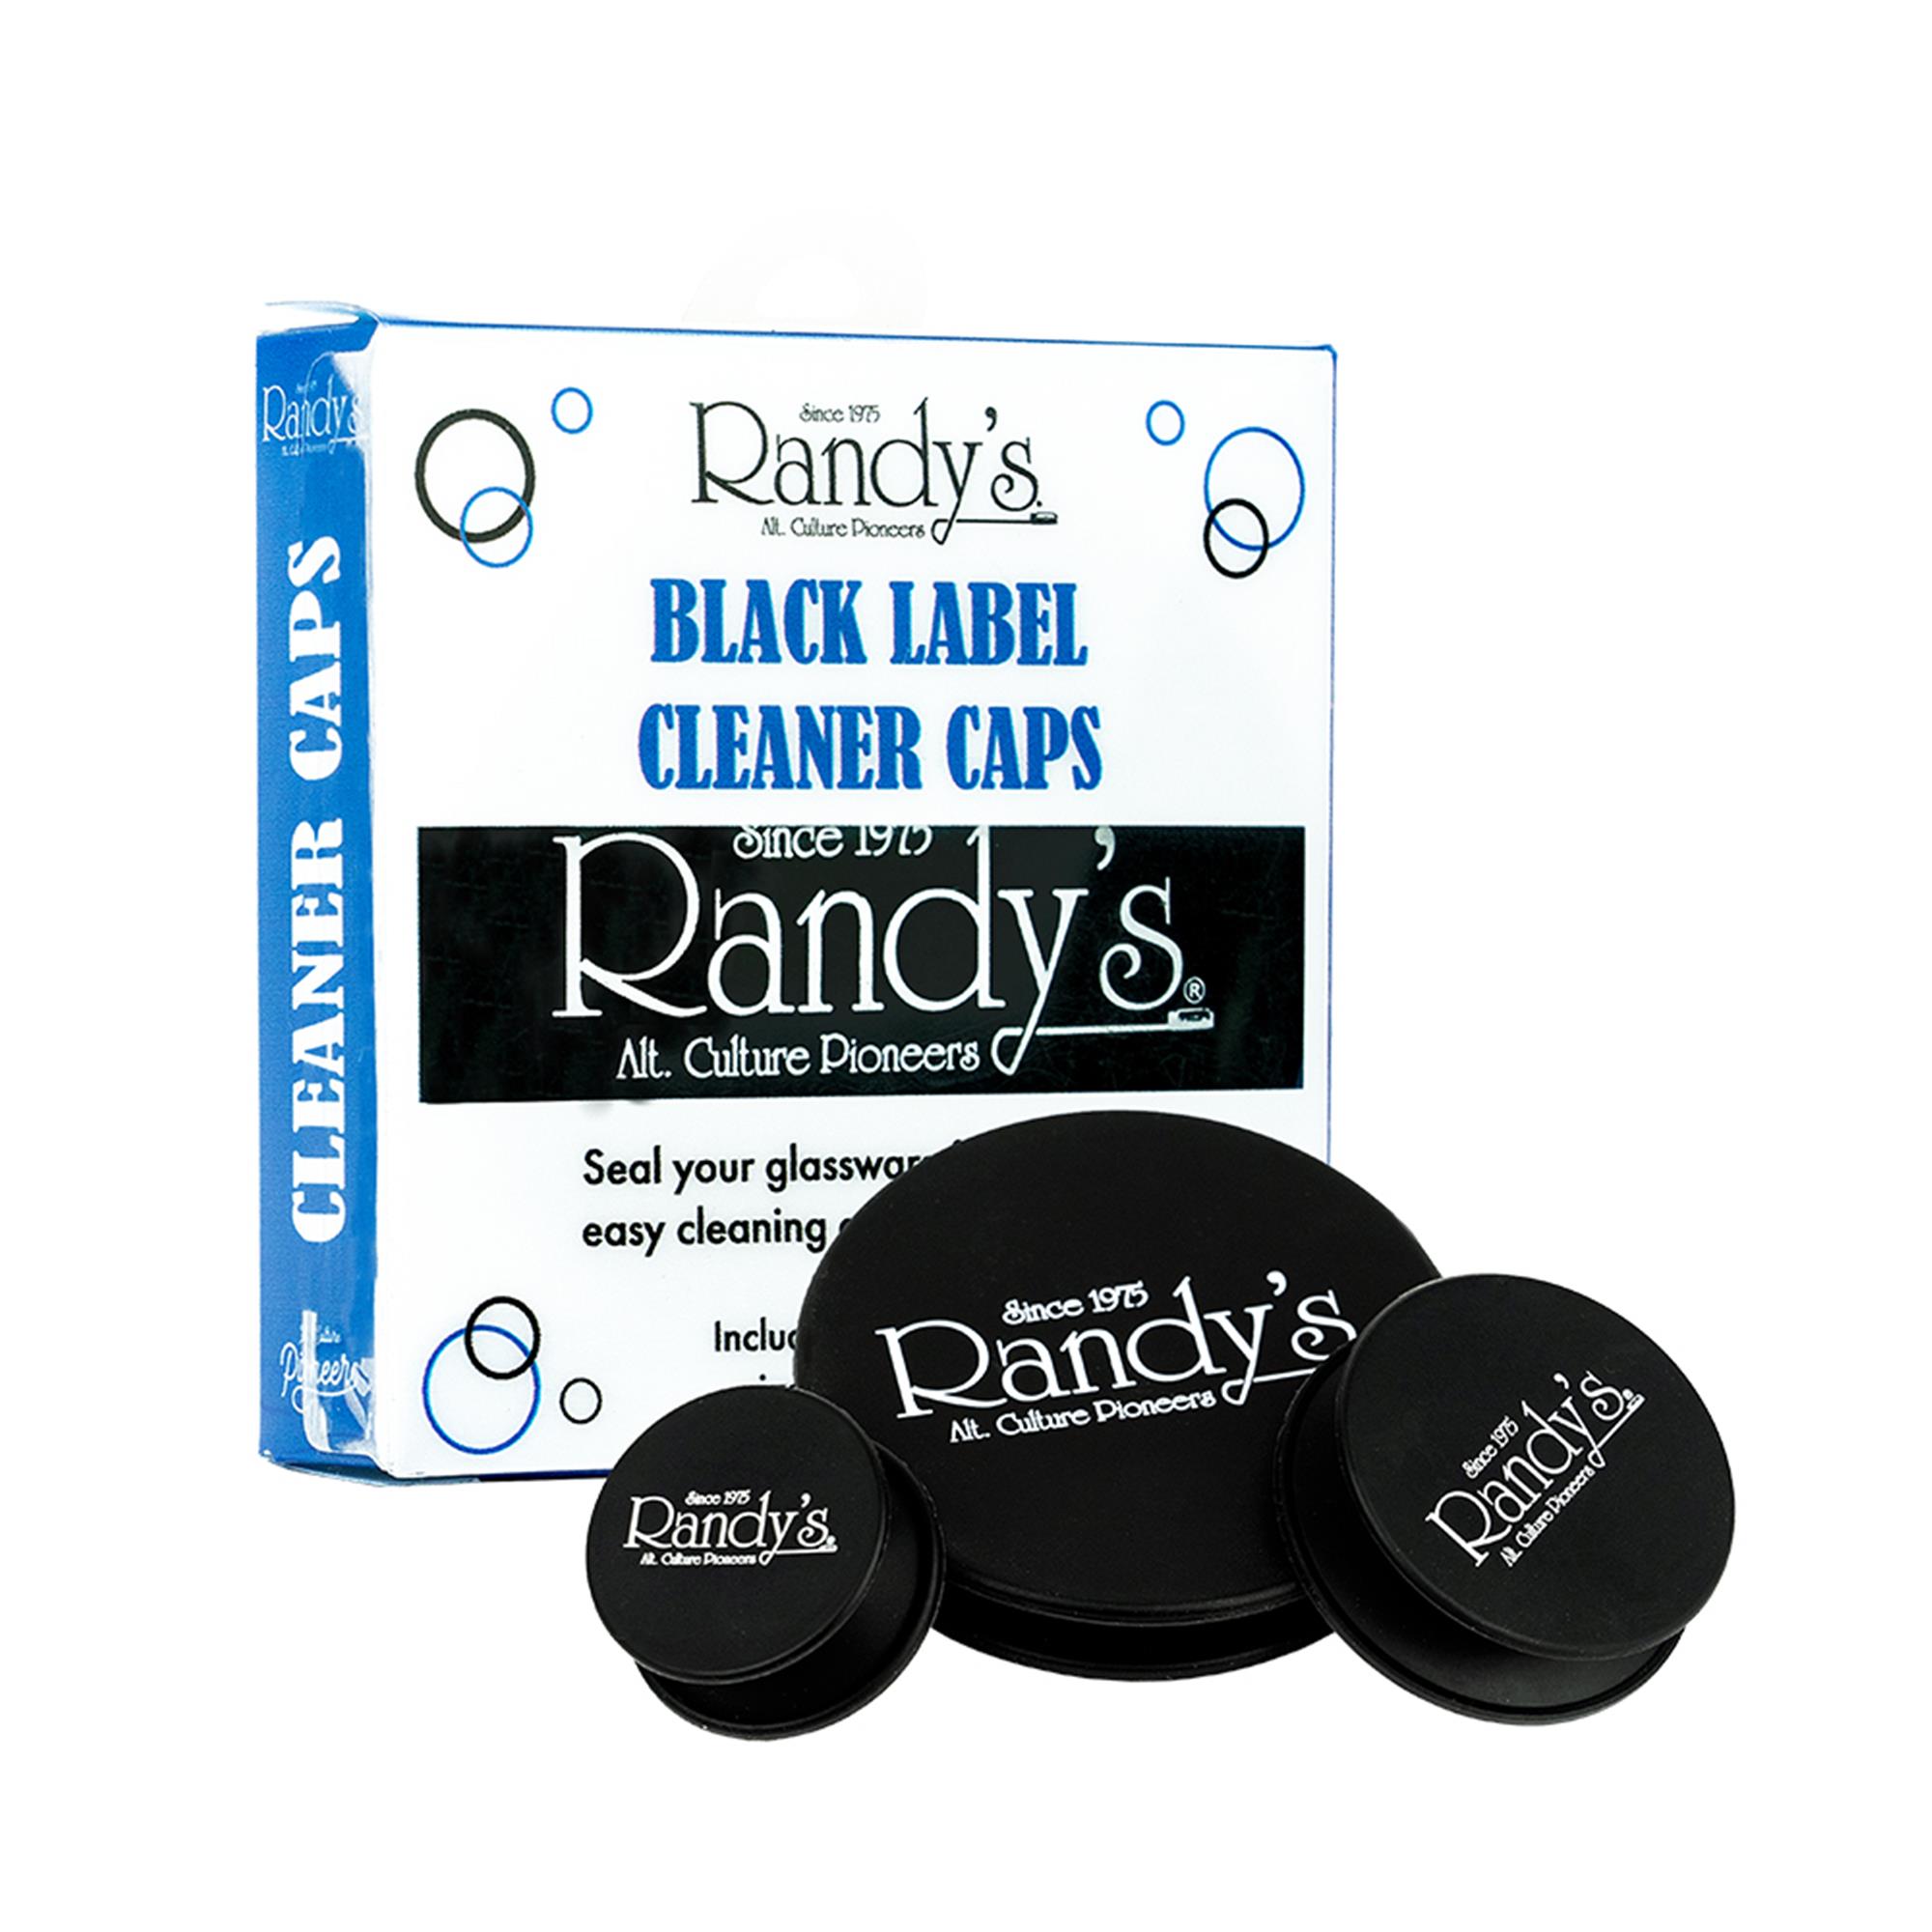 RANDY'S BLACK LABEL CLEANER CAPS